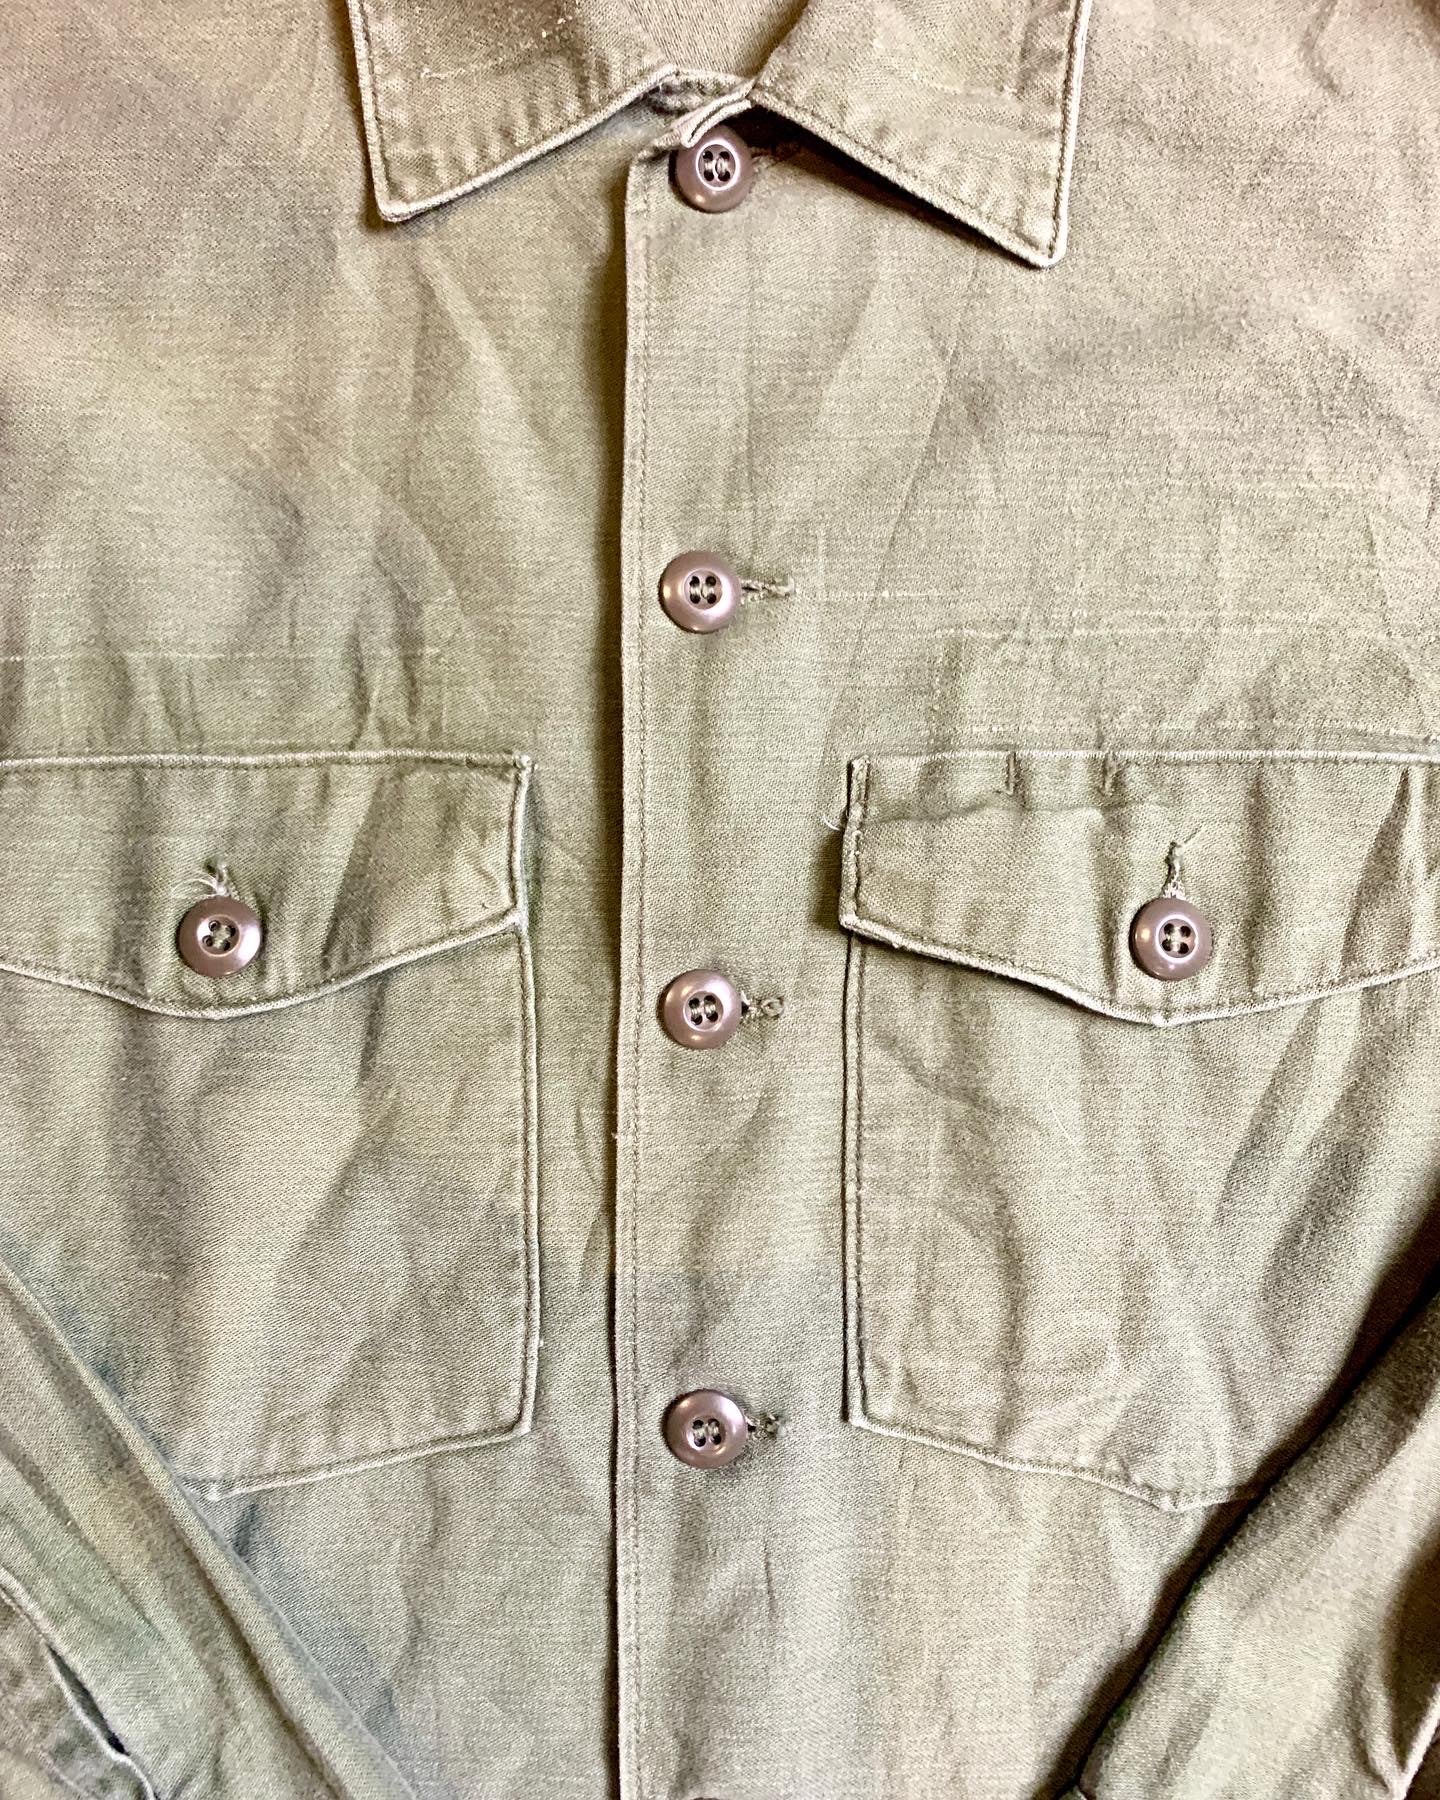 US Army OG 107 Shirt 1970 Dated